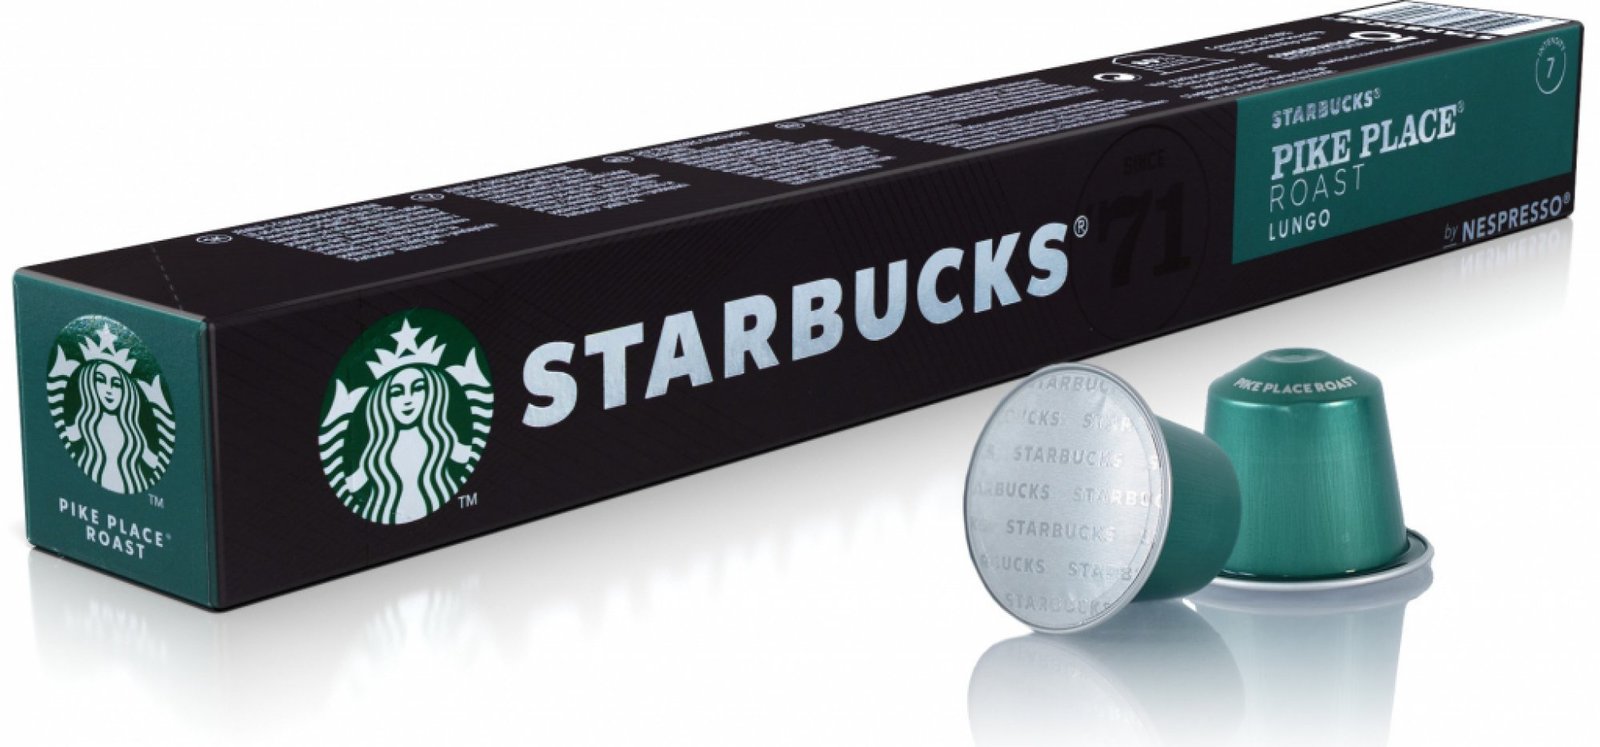 Starbucks by Nespresso® Pike Place Roast 2x10pcs coffee capsules - $19.95